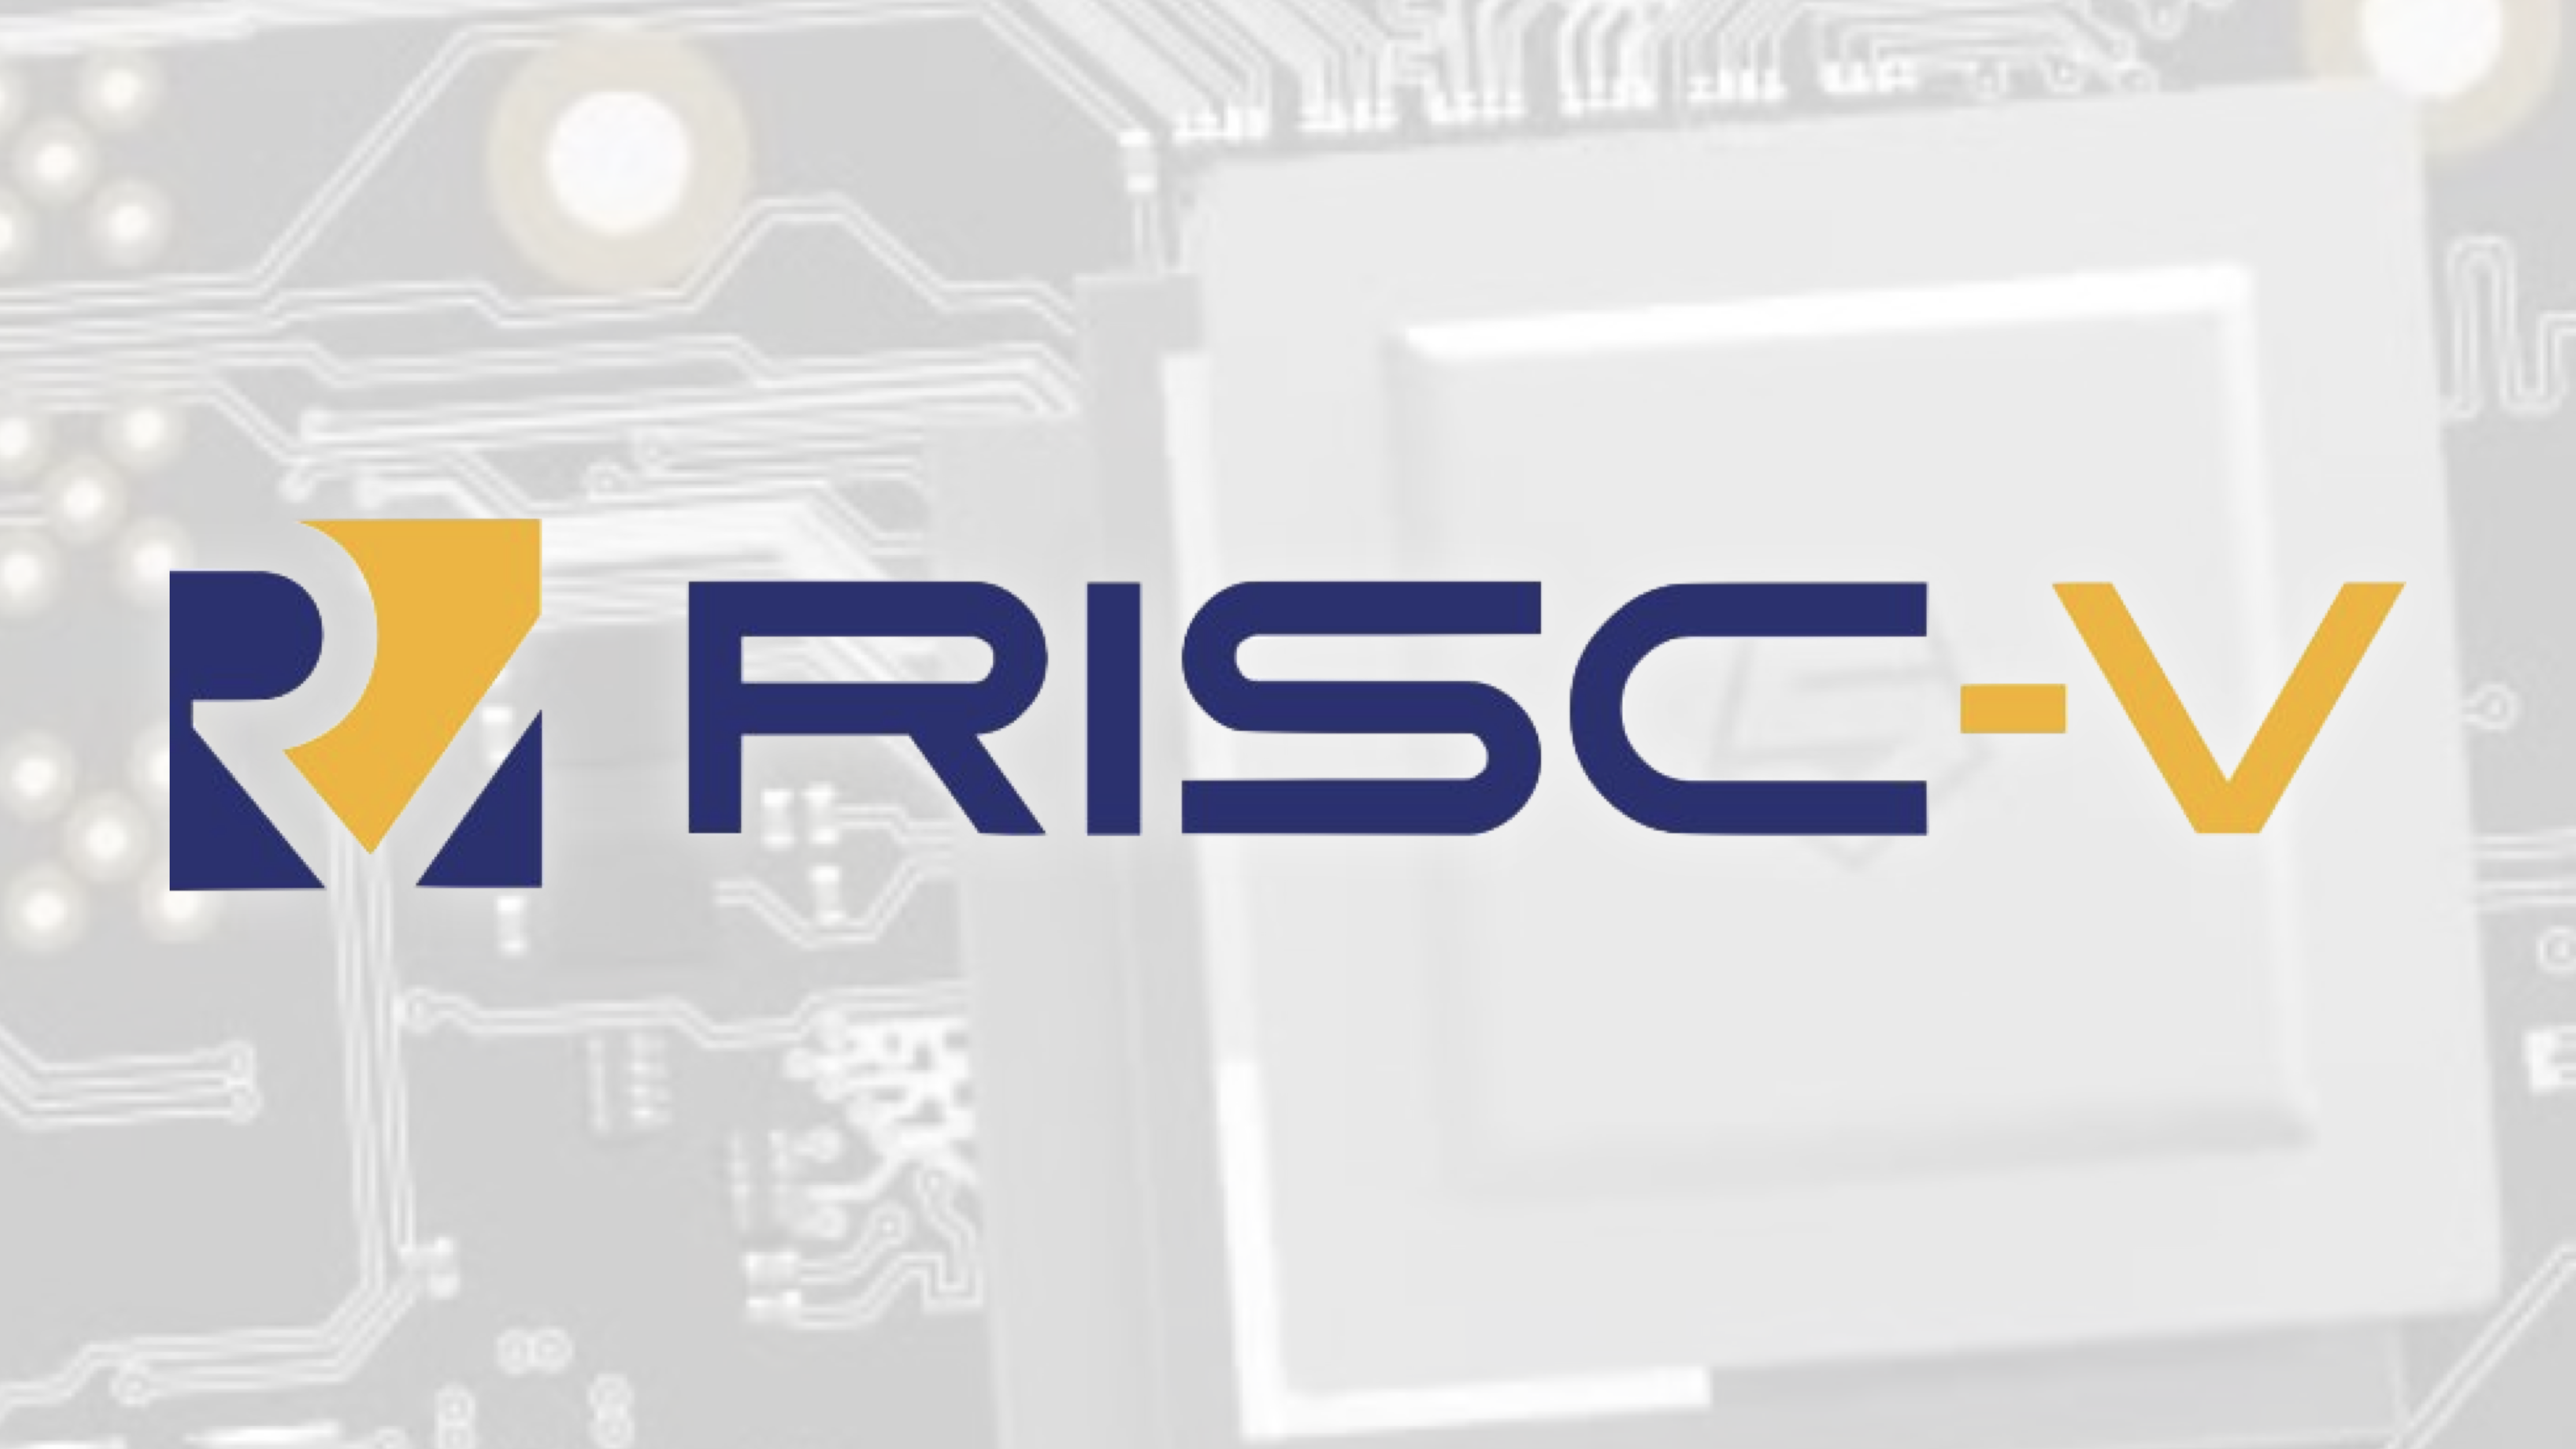 ​Qualcomm va concevoir un processeur RISC-V